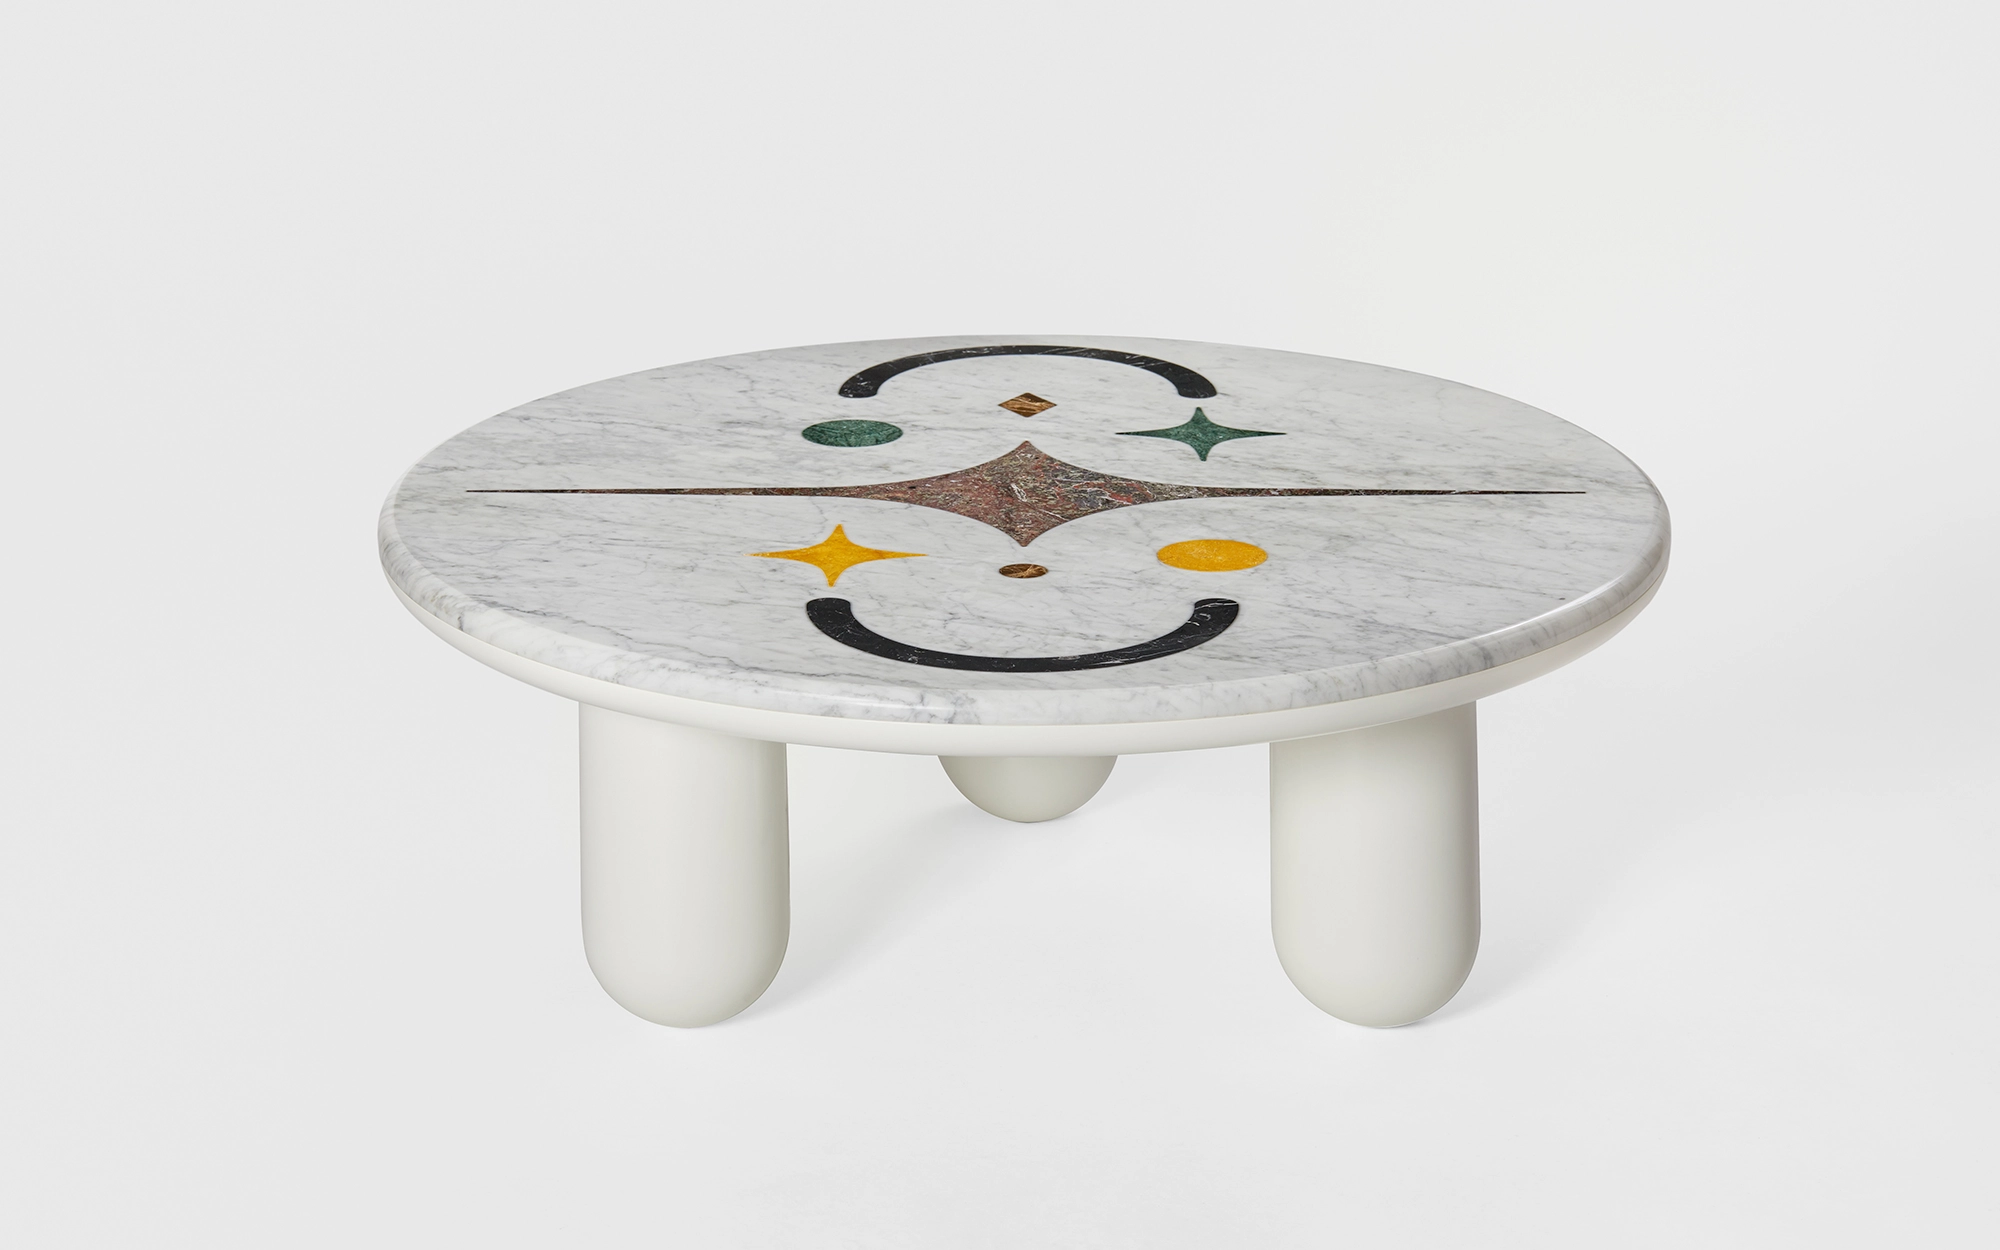 Hymy Round coffee table - Multicolored - Jaime Hayon - Lucas Ratton x kamel mennour x Galerie kreo in Saint-Tropez.